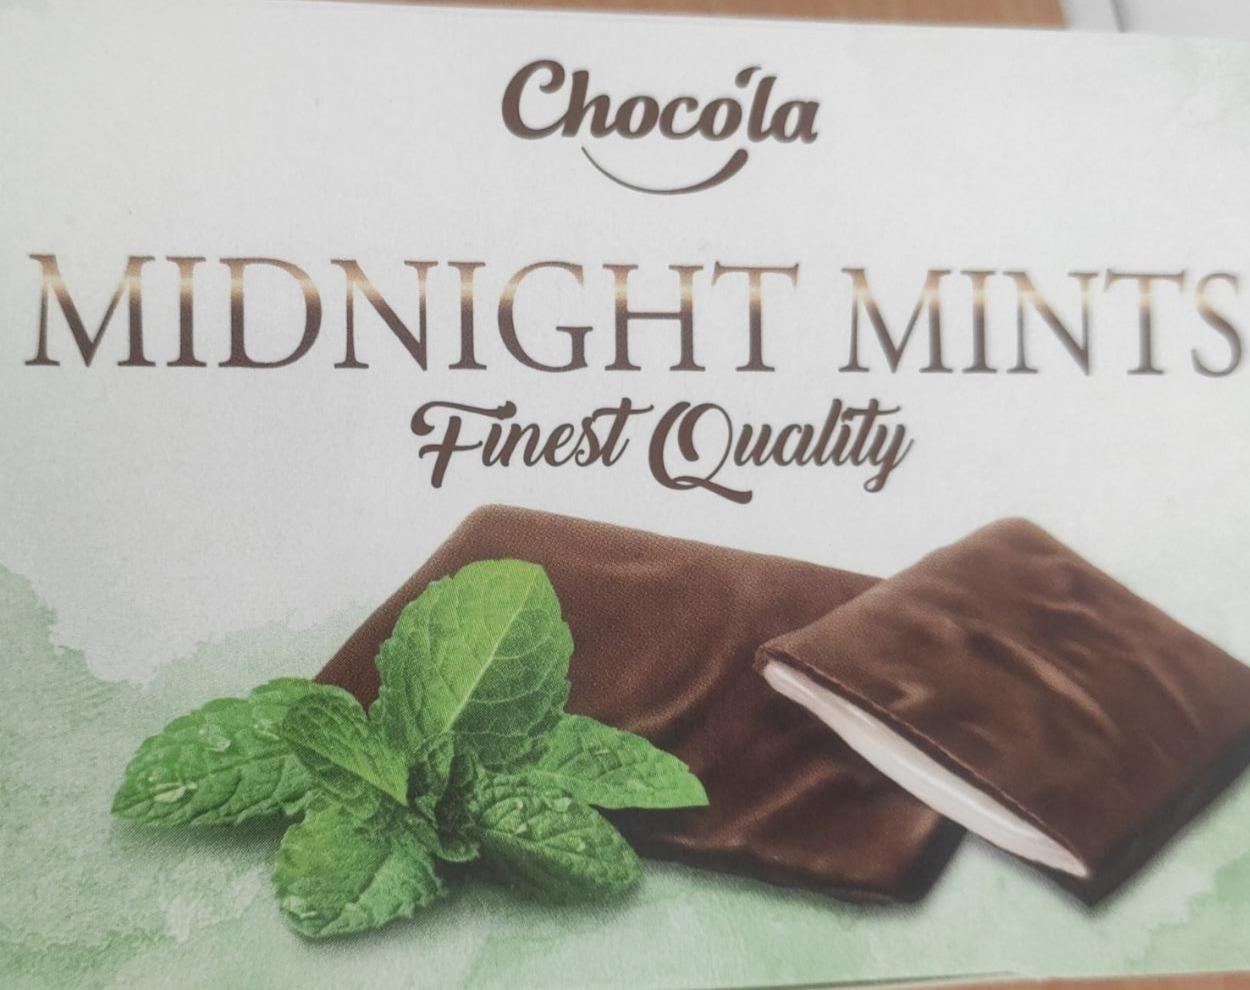 Fotografie - Midnight mints finest quality Chocola